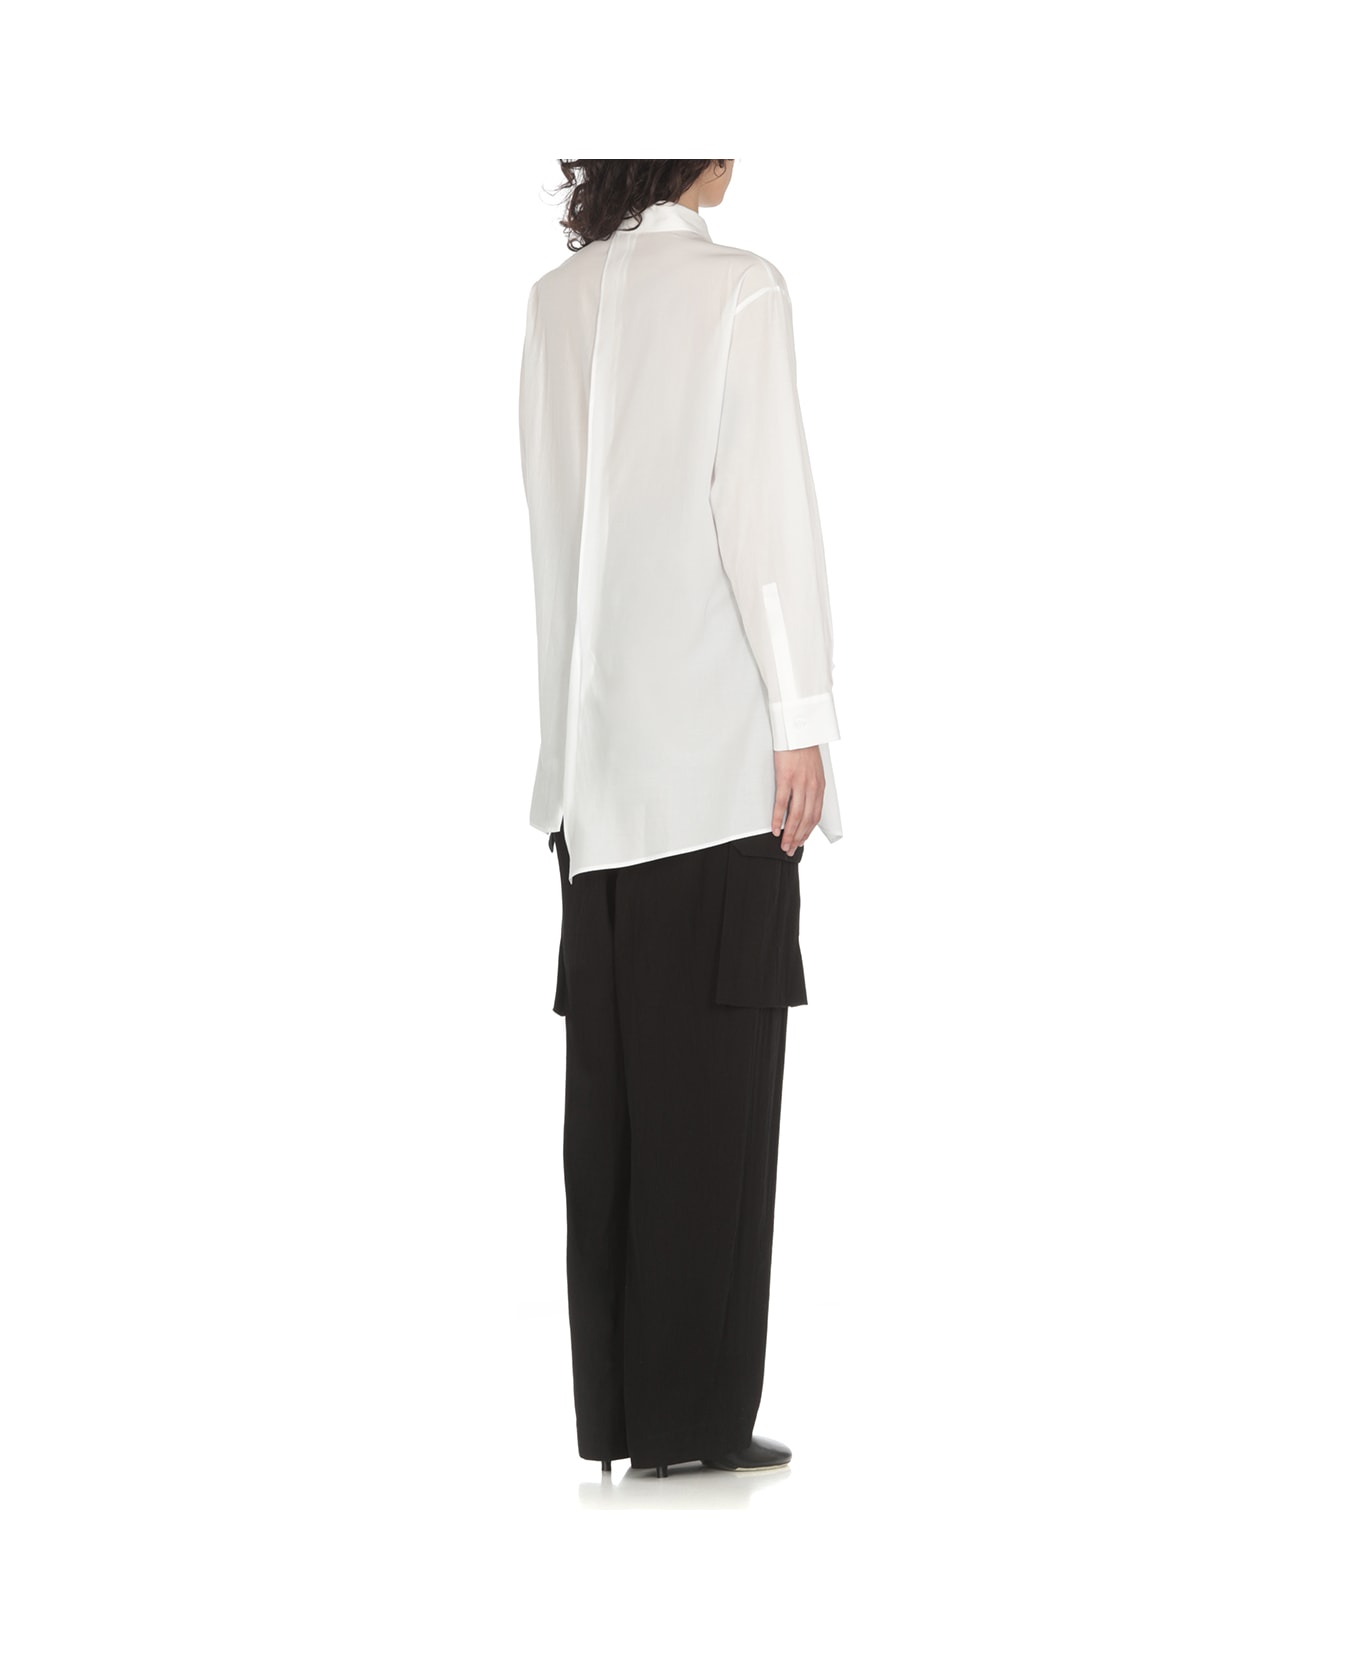 Yohji Yamamoto Cotton Blend Shirt - White